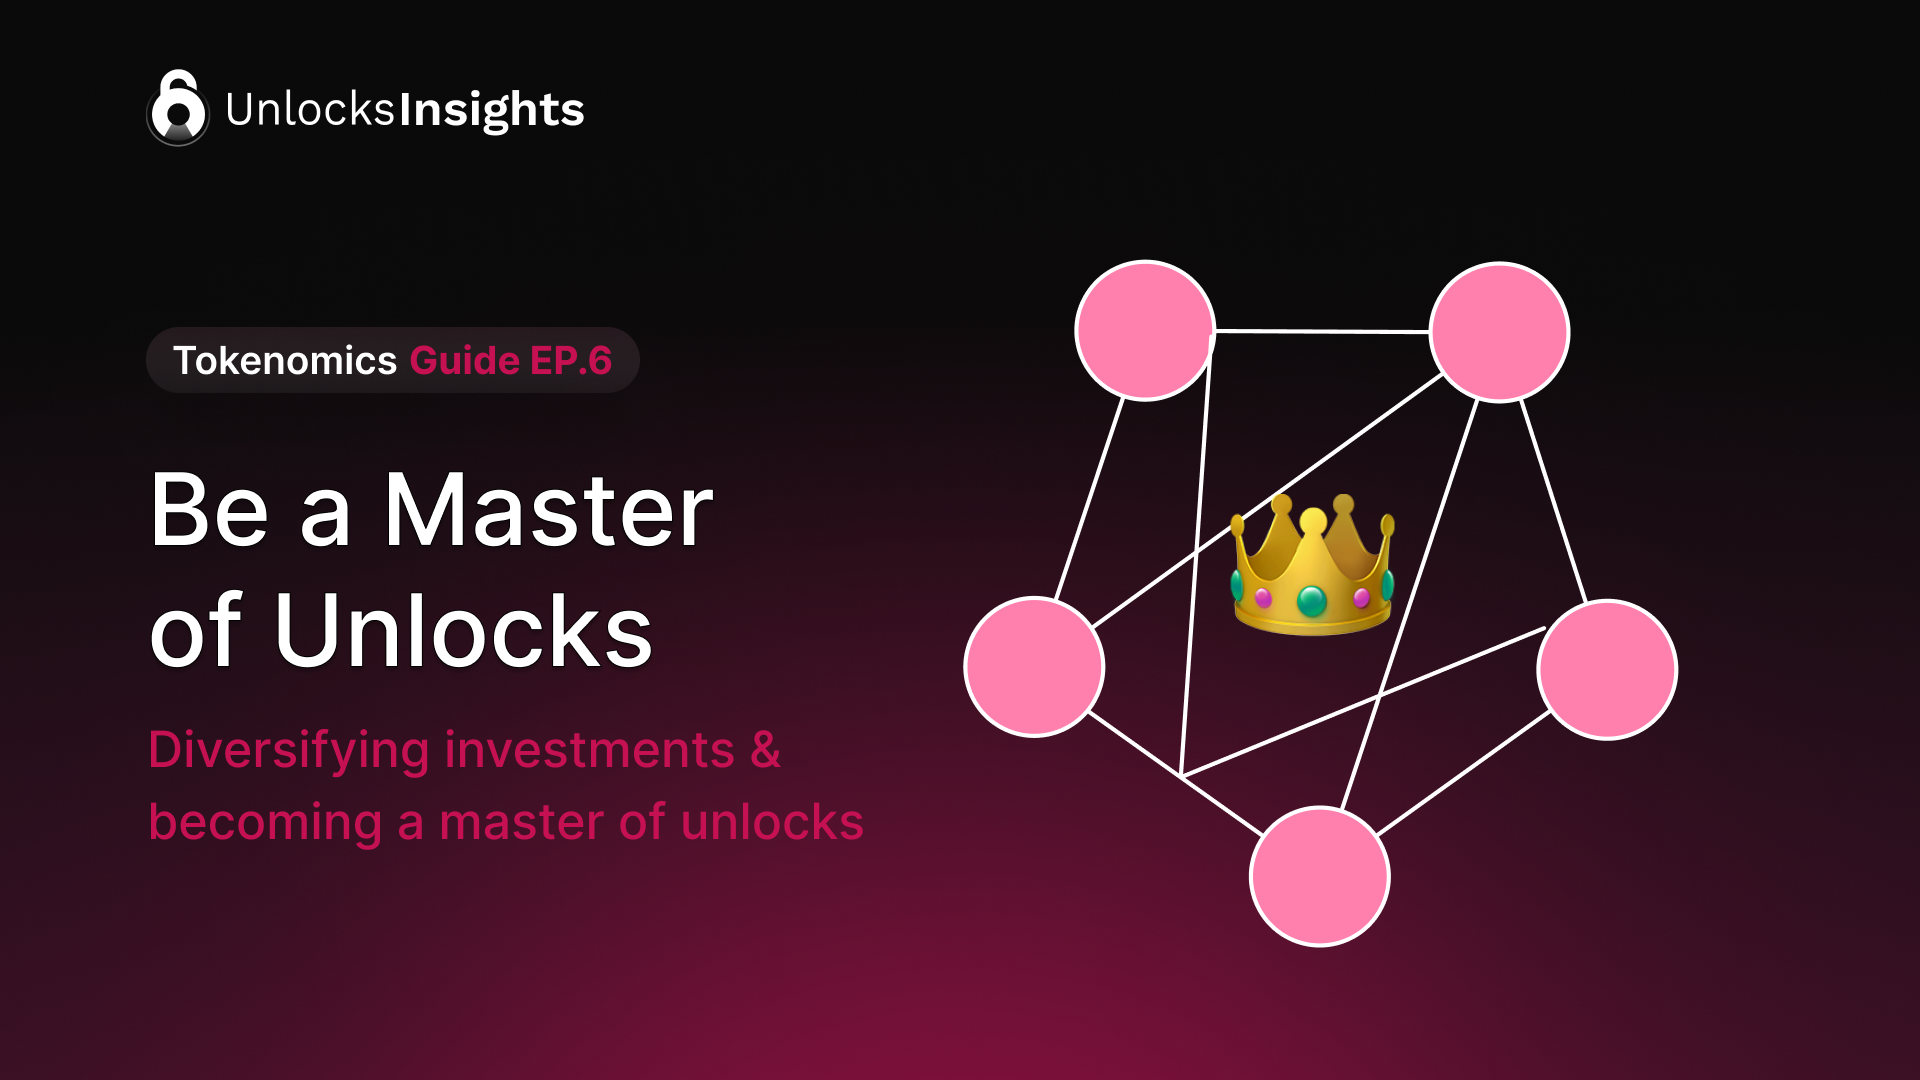 Be a Master of Unlocks